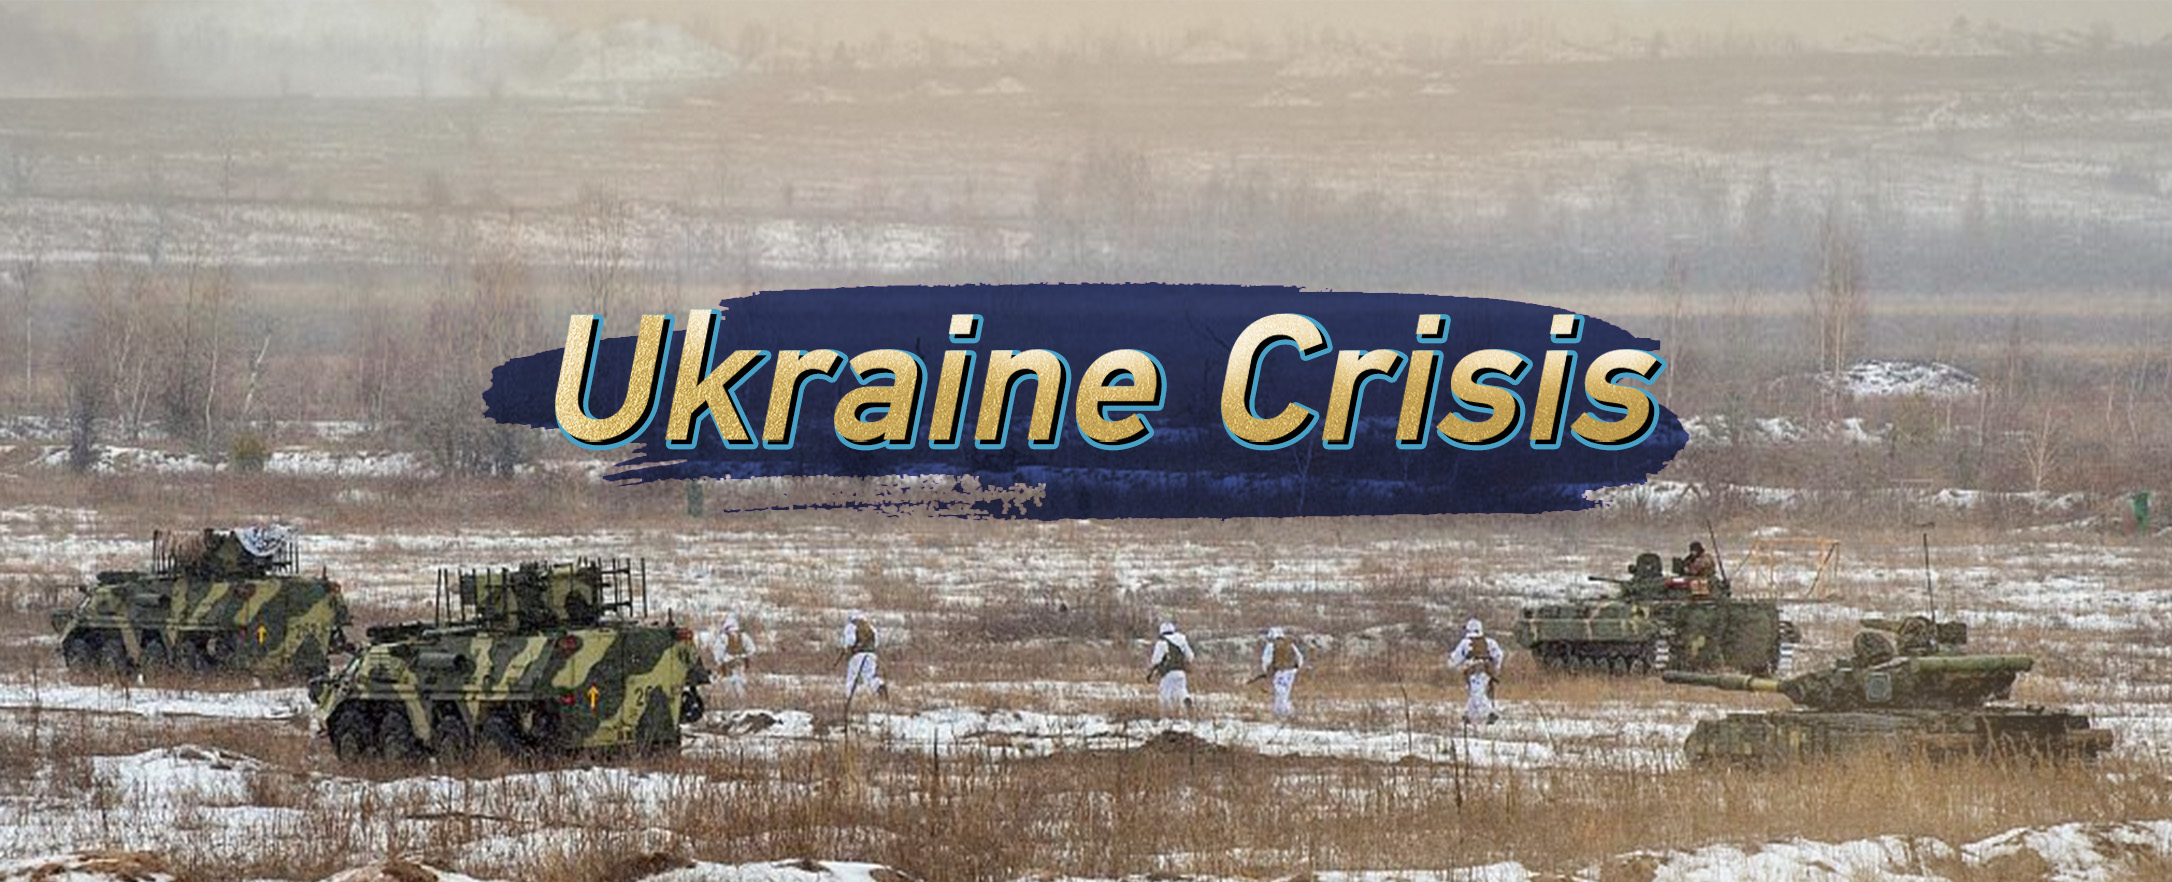 Ukraine crisis web banner 